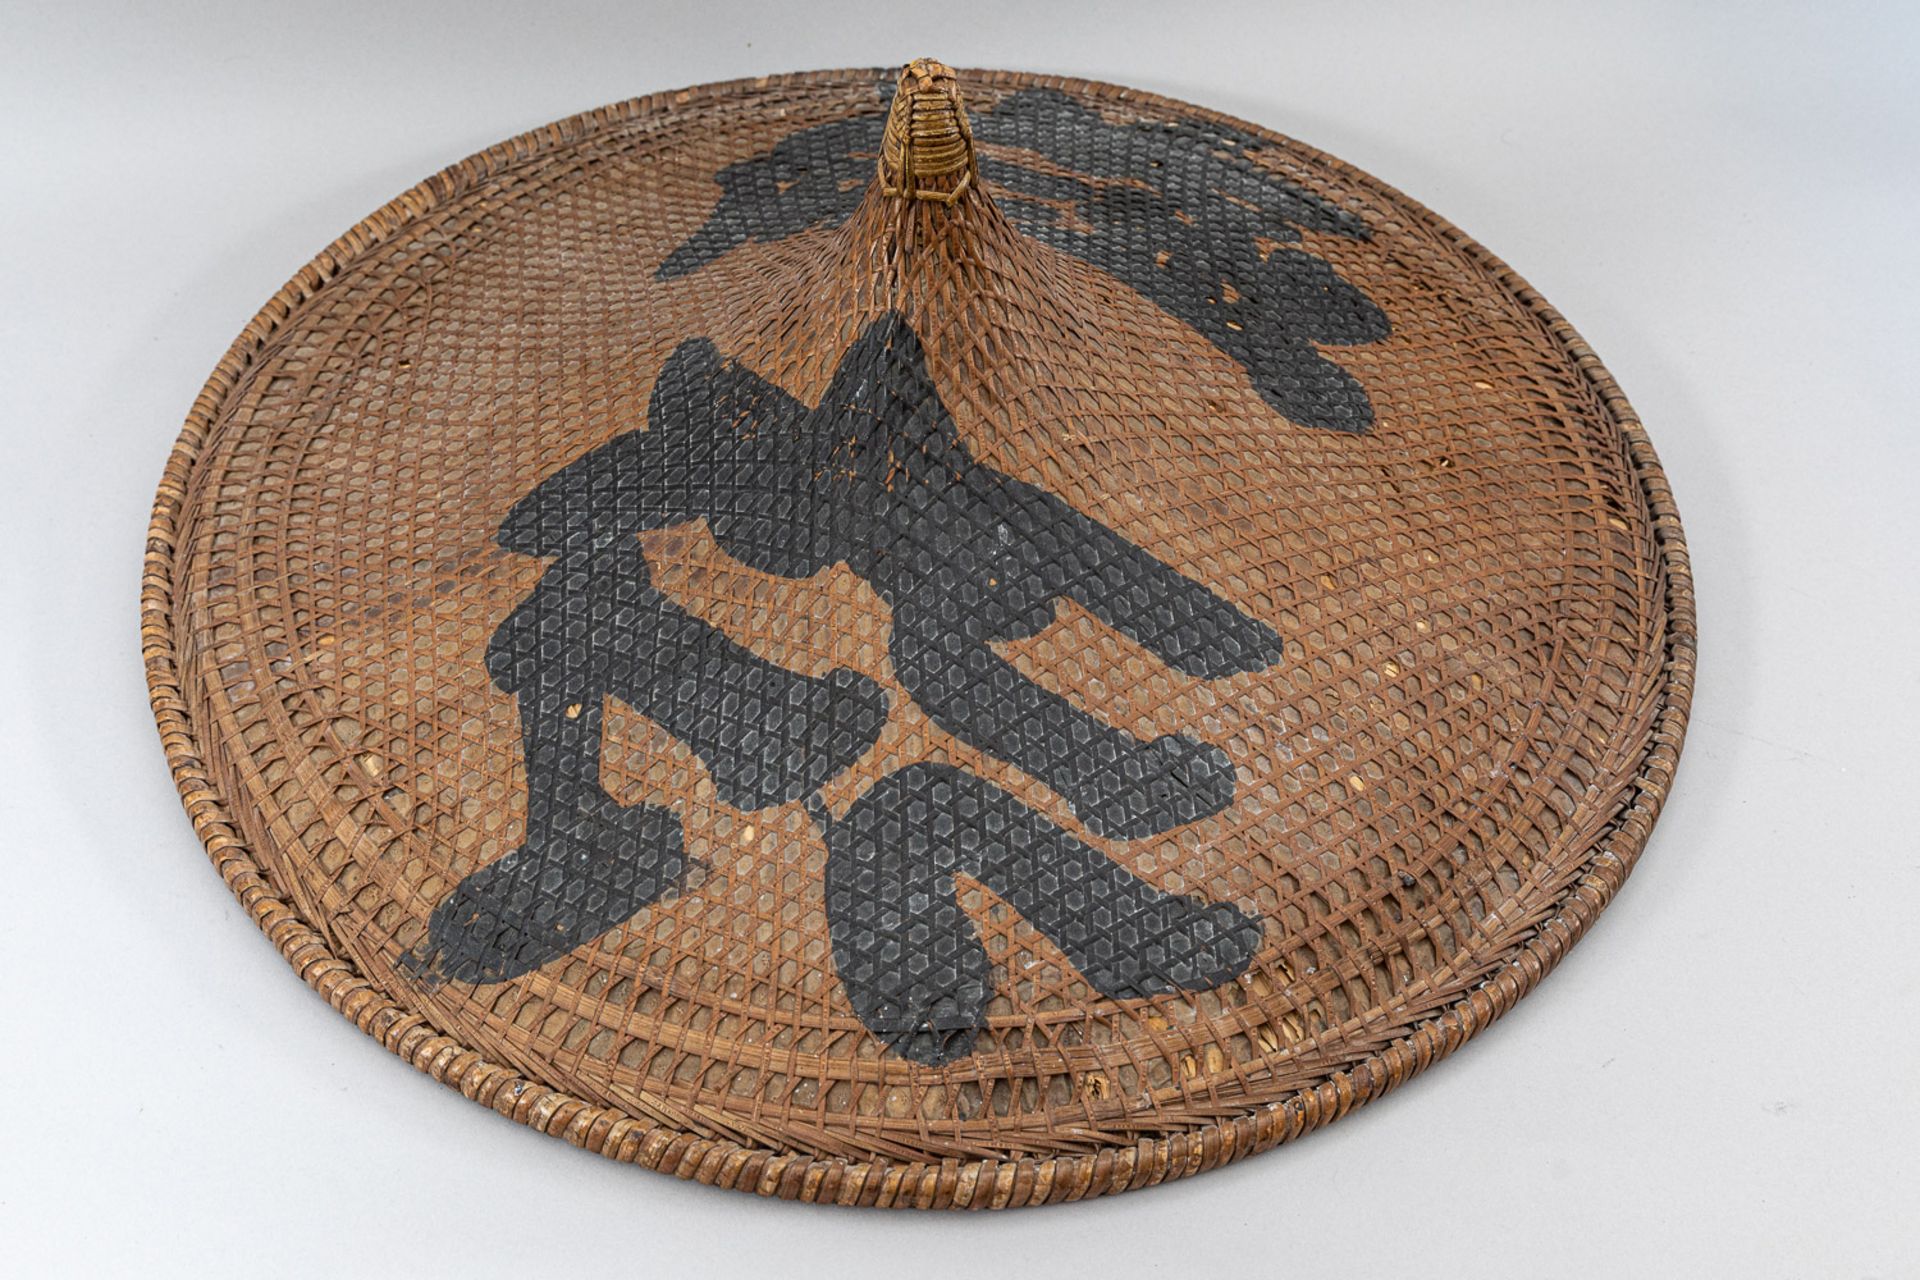 Asian hat